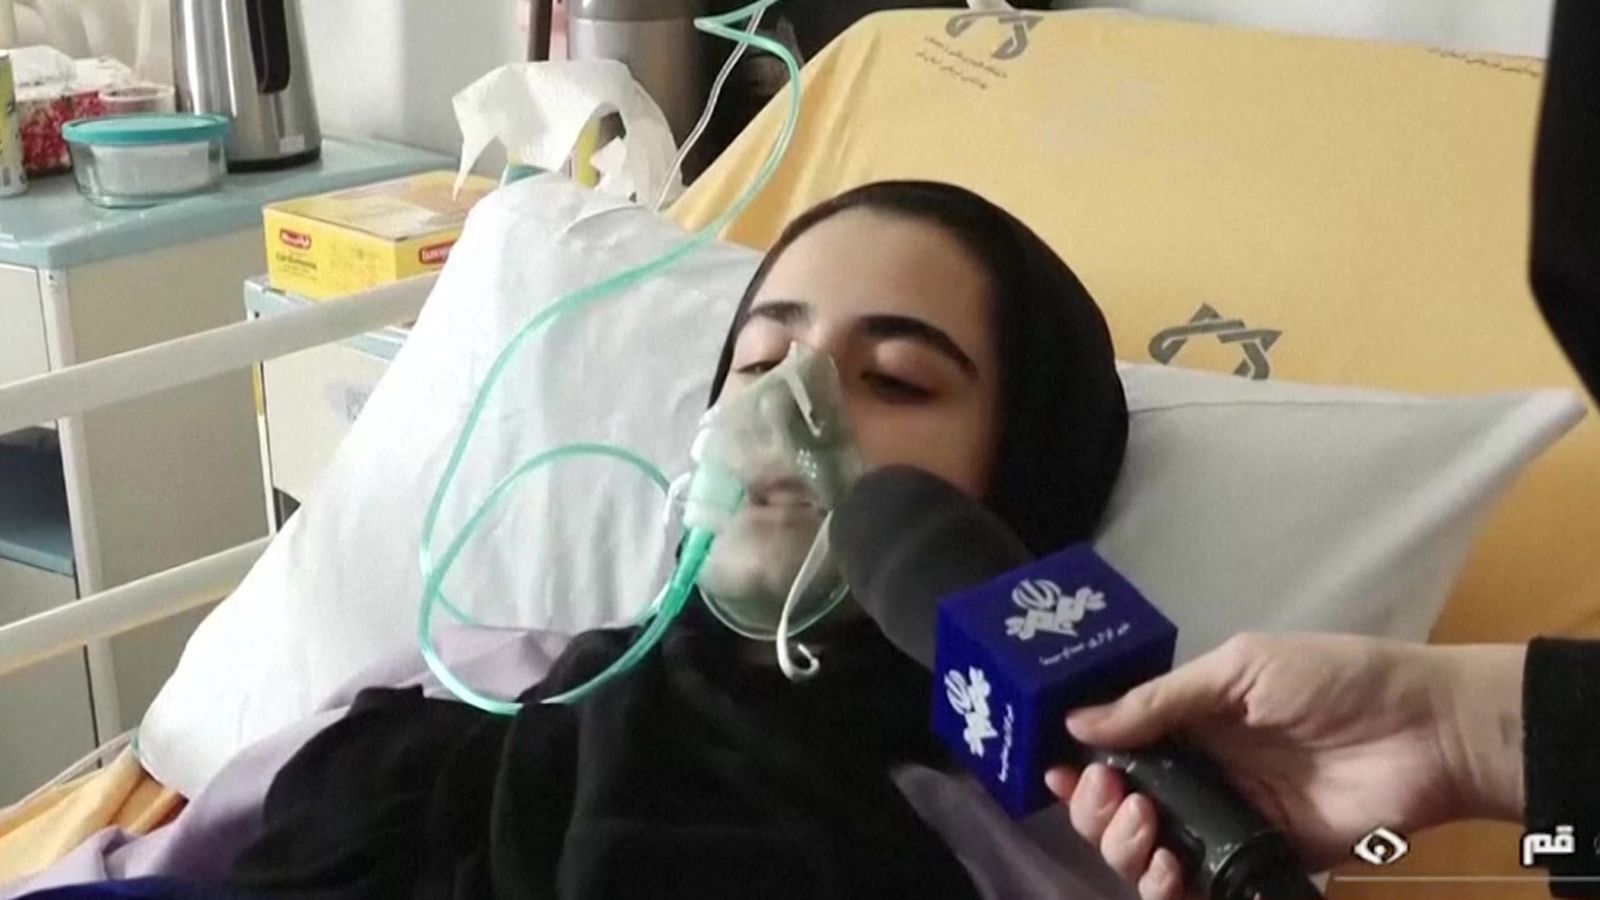 Iran's Ayatollah Khamenei says culprits in suspected schoolgirl poisonings should be executed